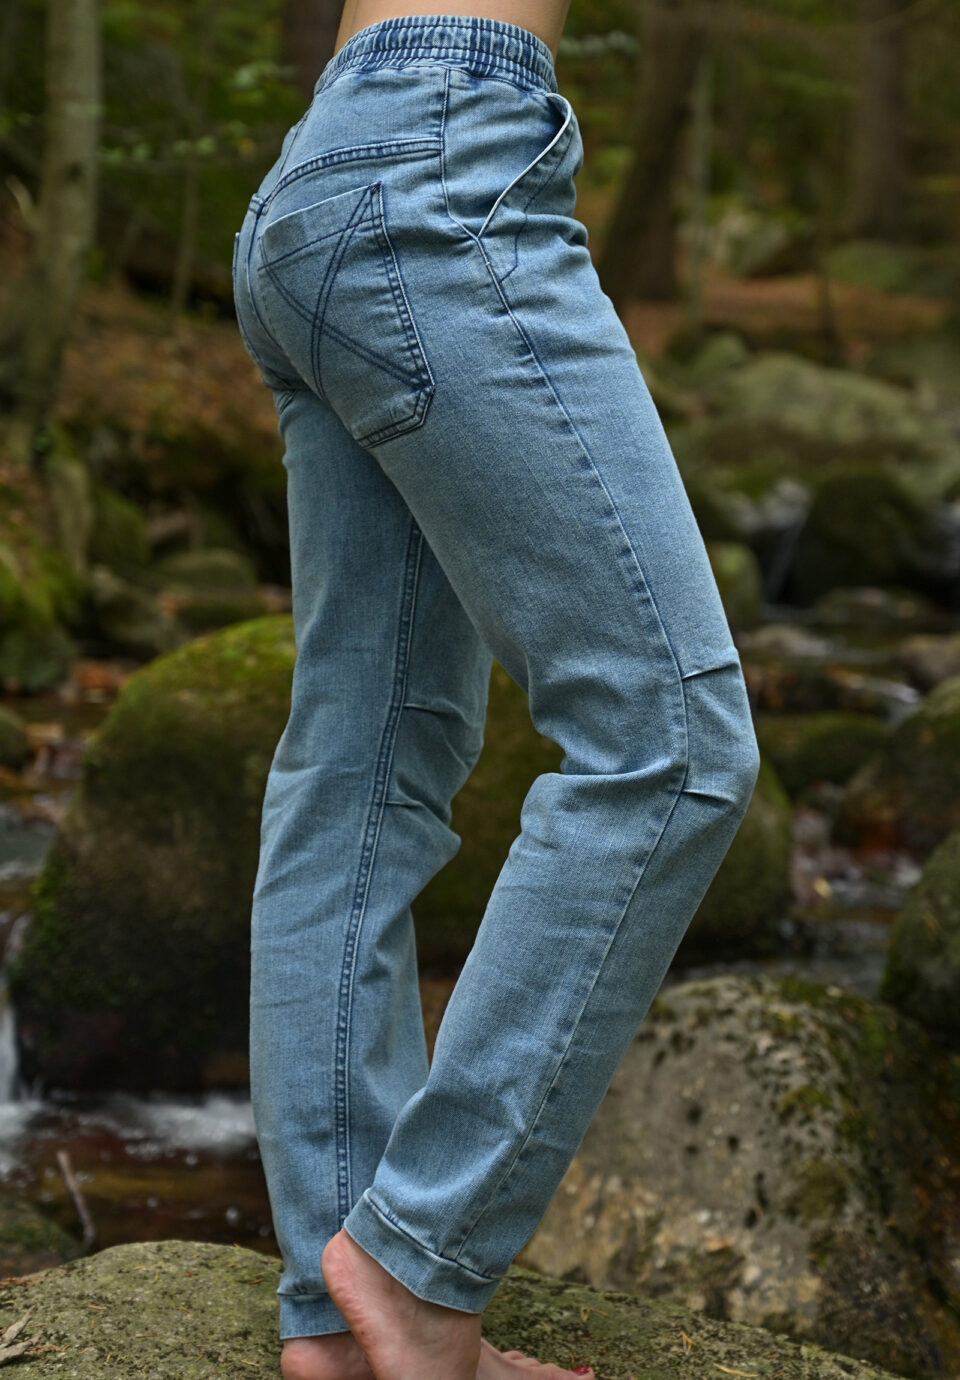 "X" Pockets women pants - light blue jeans